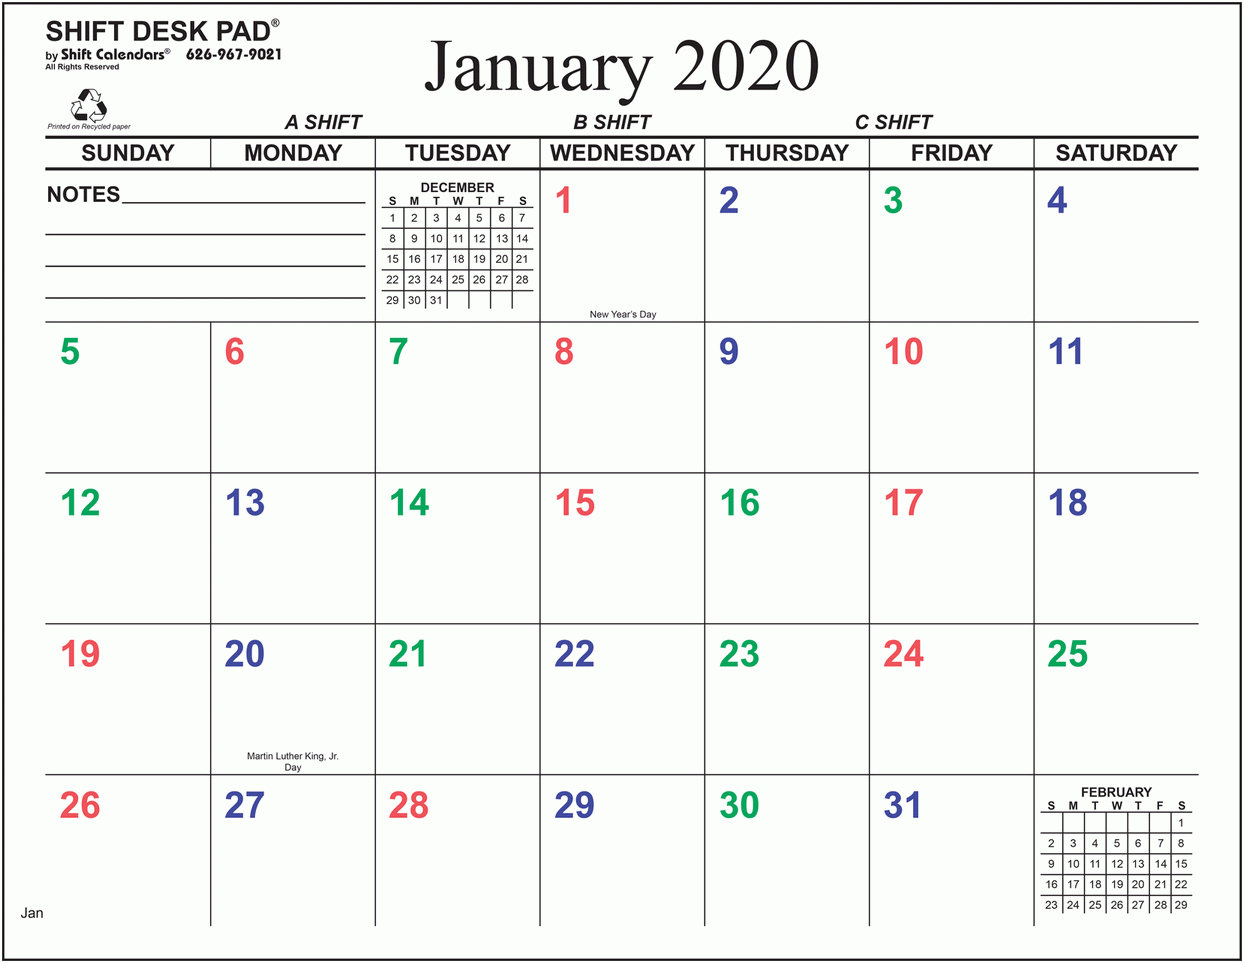 Shift Calendars